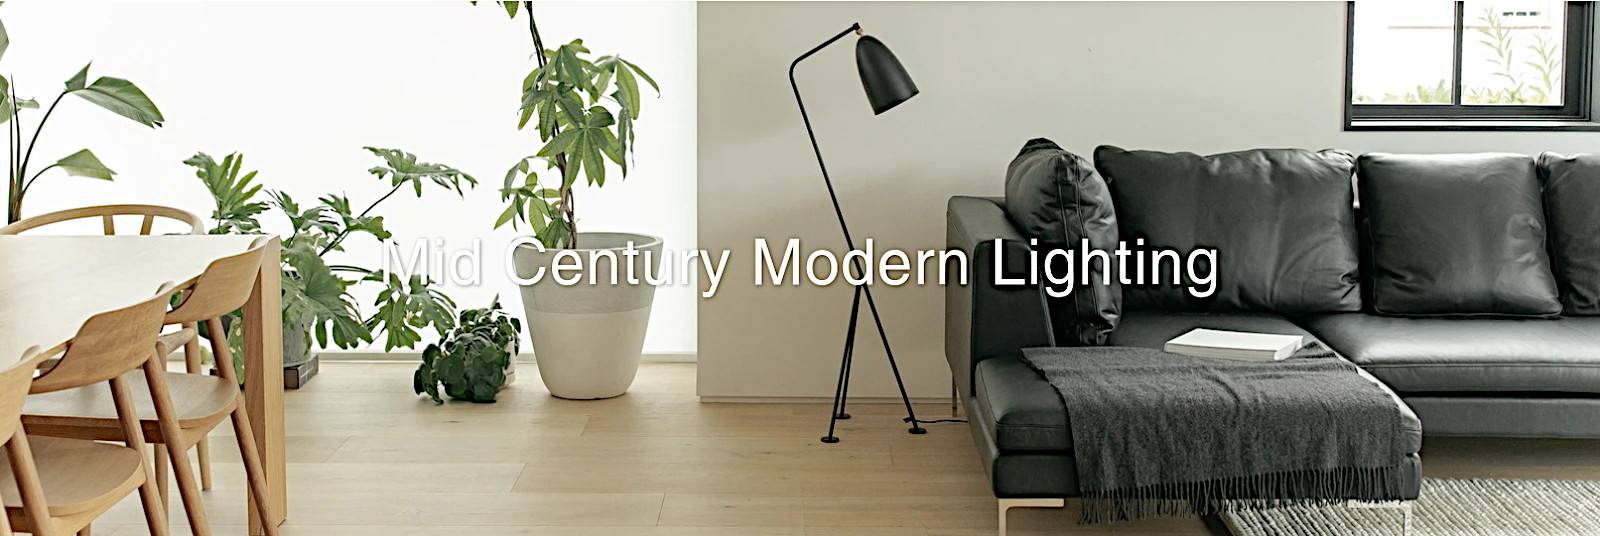 Mid century modern lighting